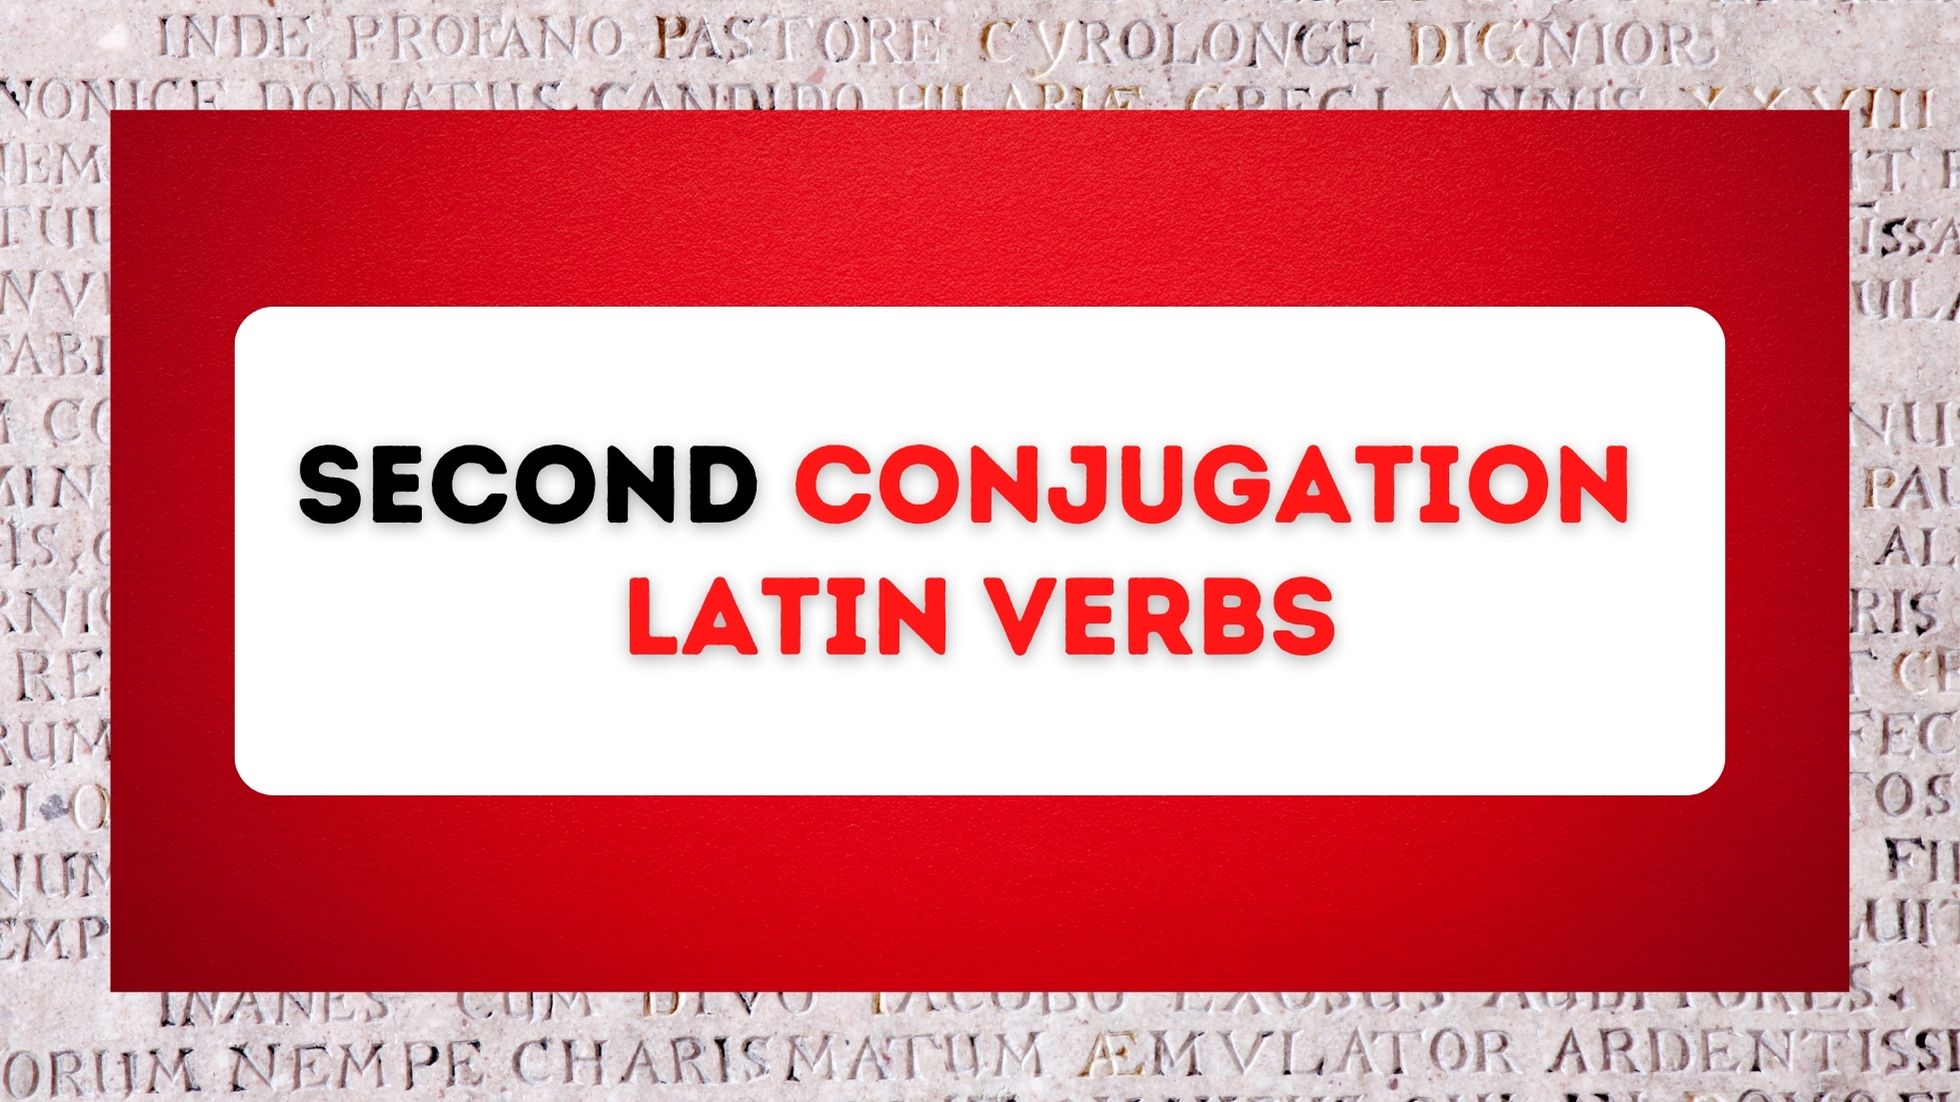 Second conjugation Latin verbs